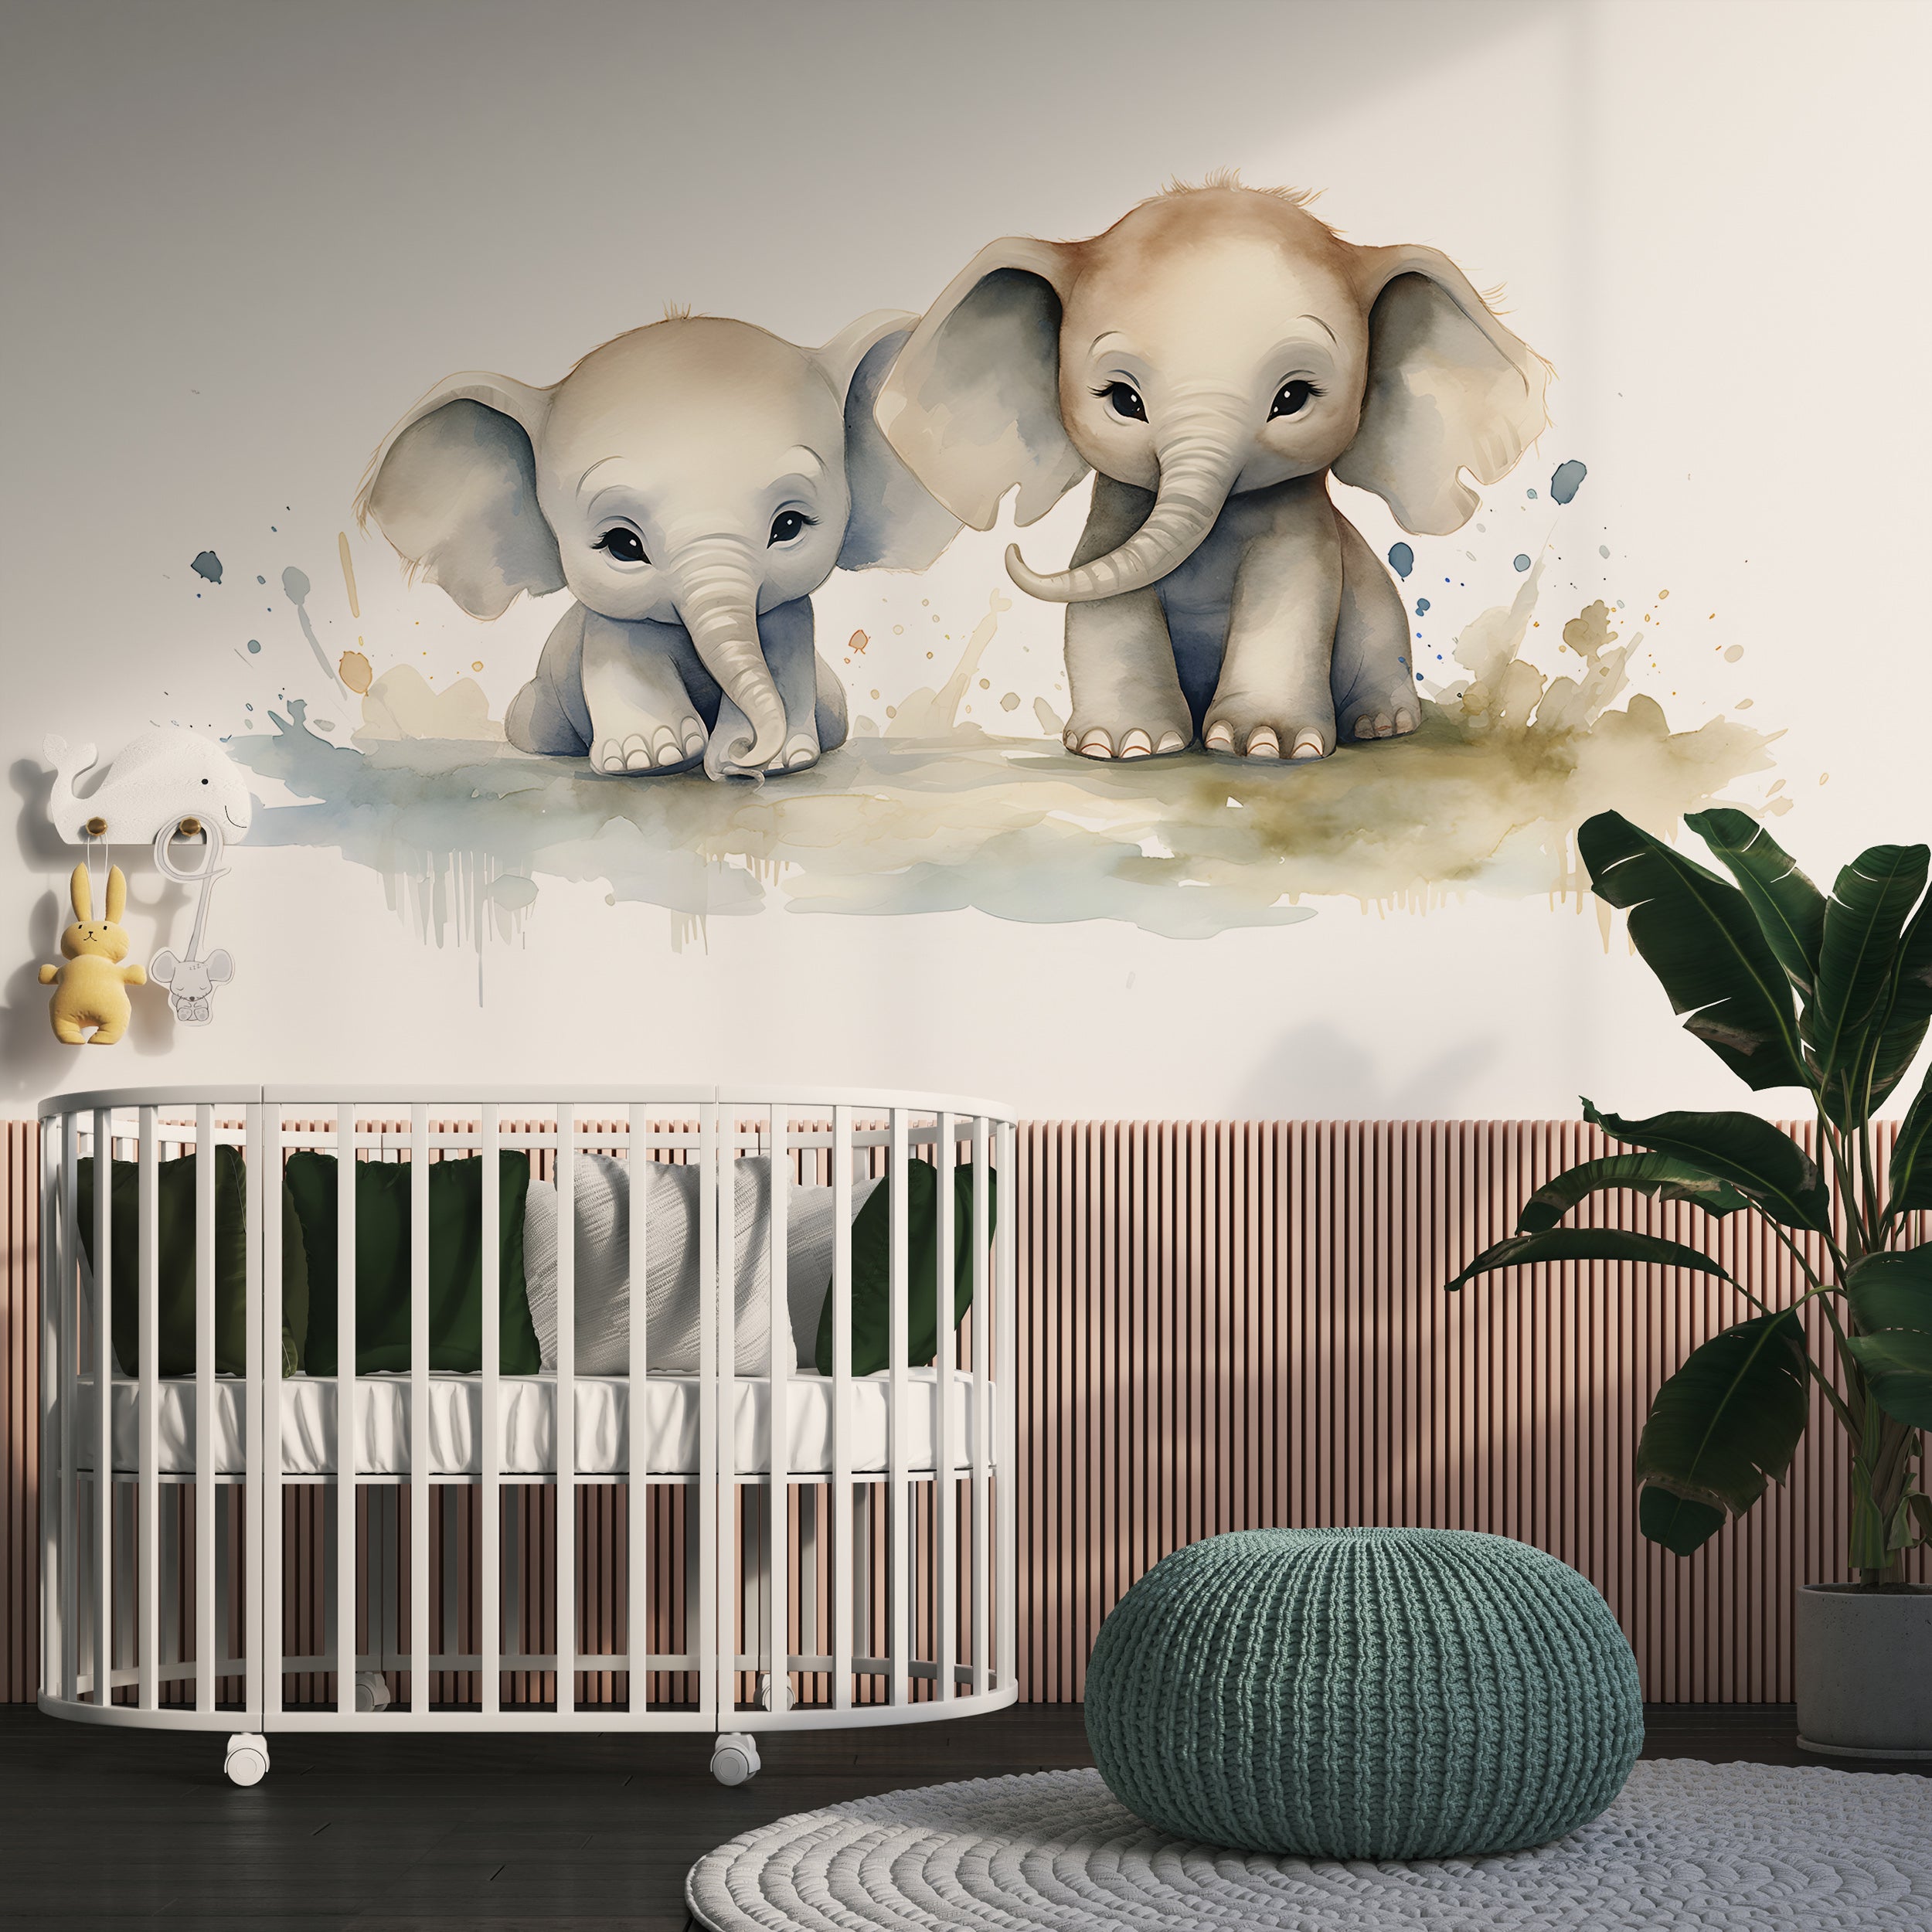 Enchanting Elephant Nursery Decor